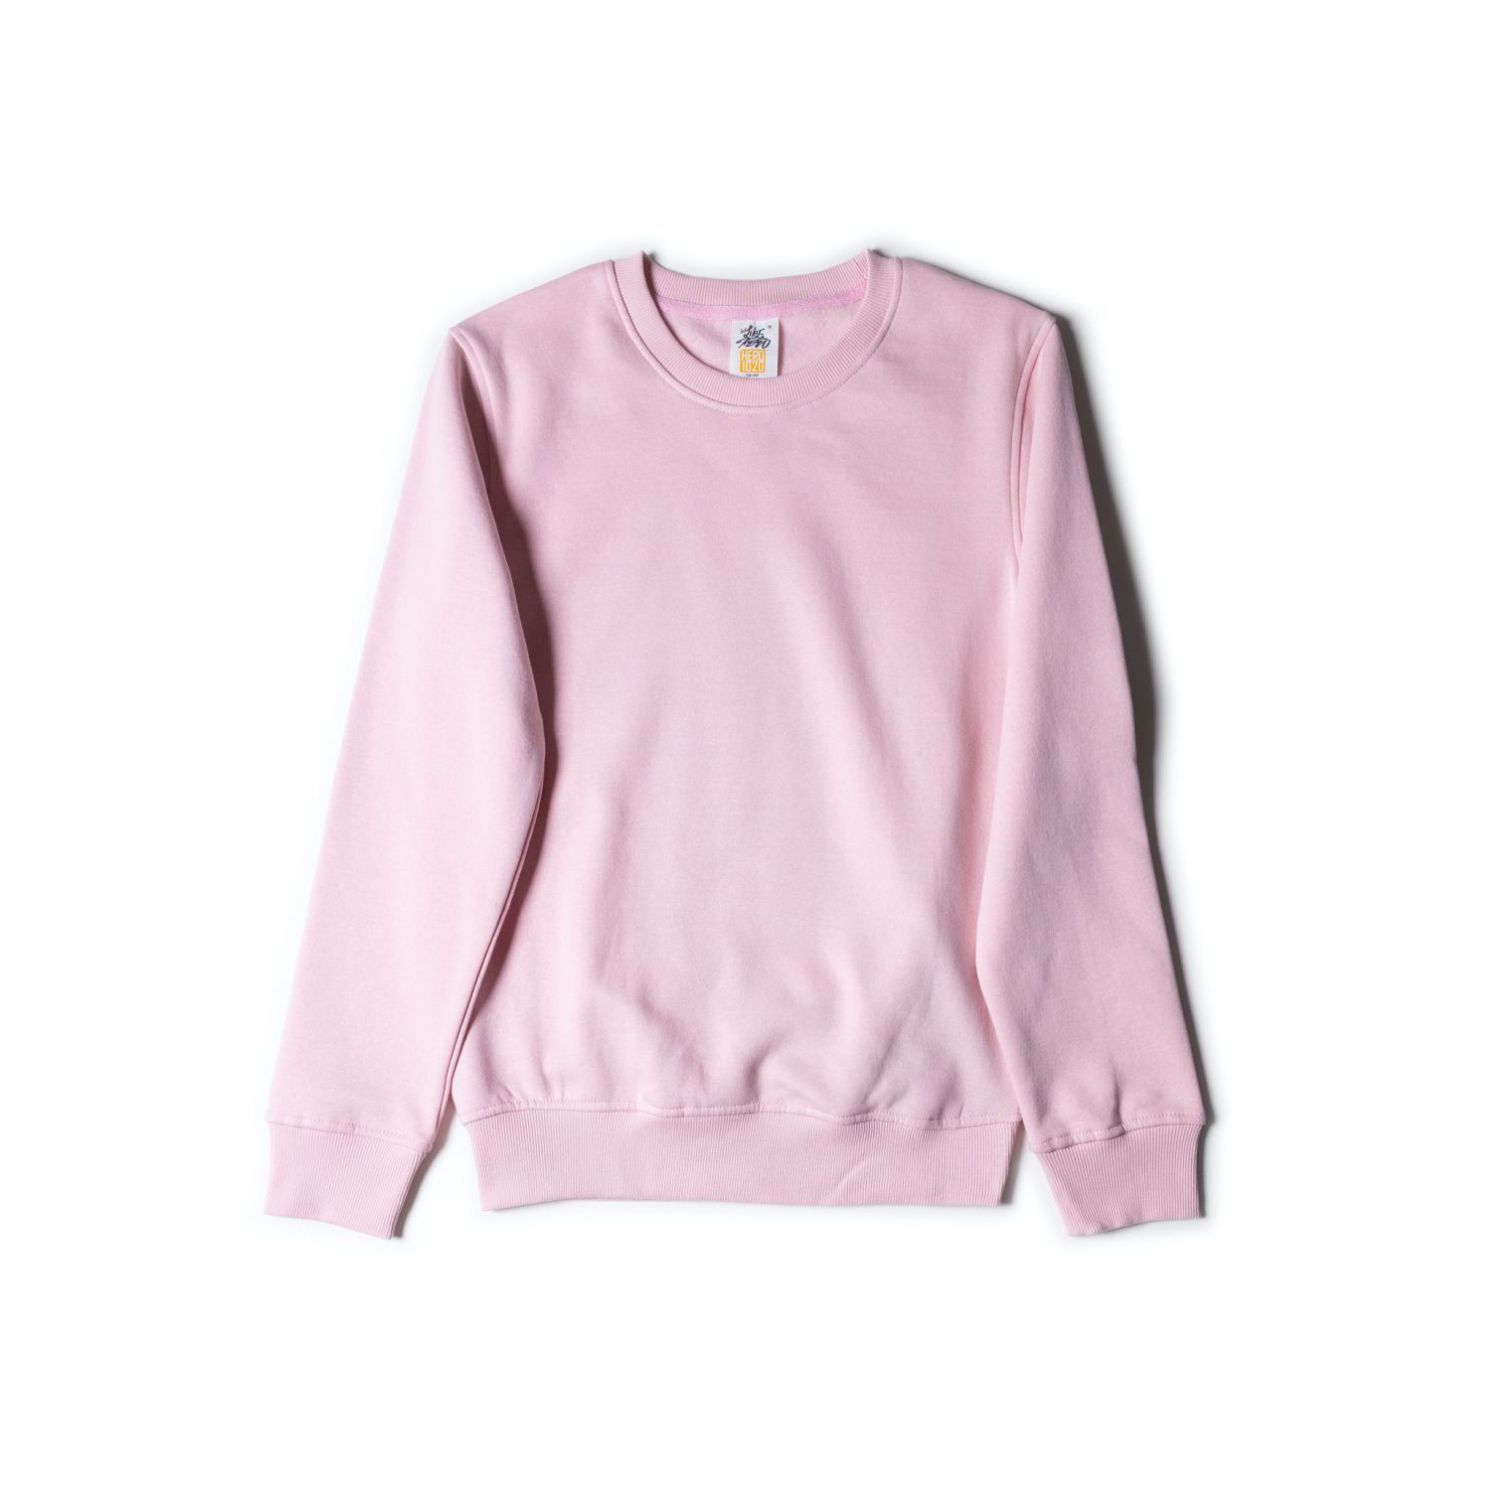 Just Like Hero Crewneck Sweatshirt #1020 Pink